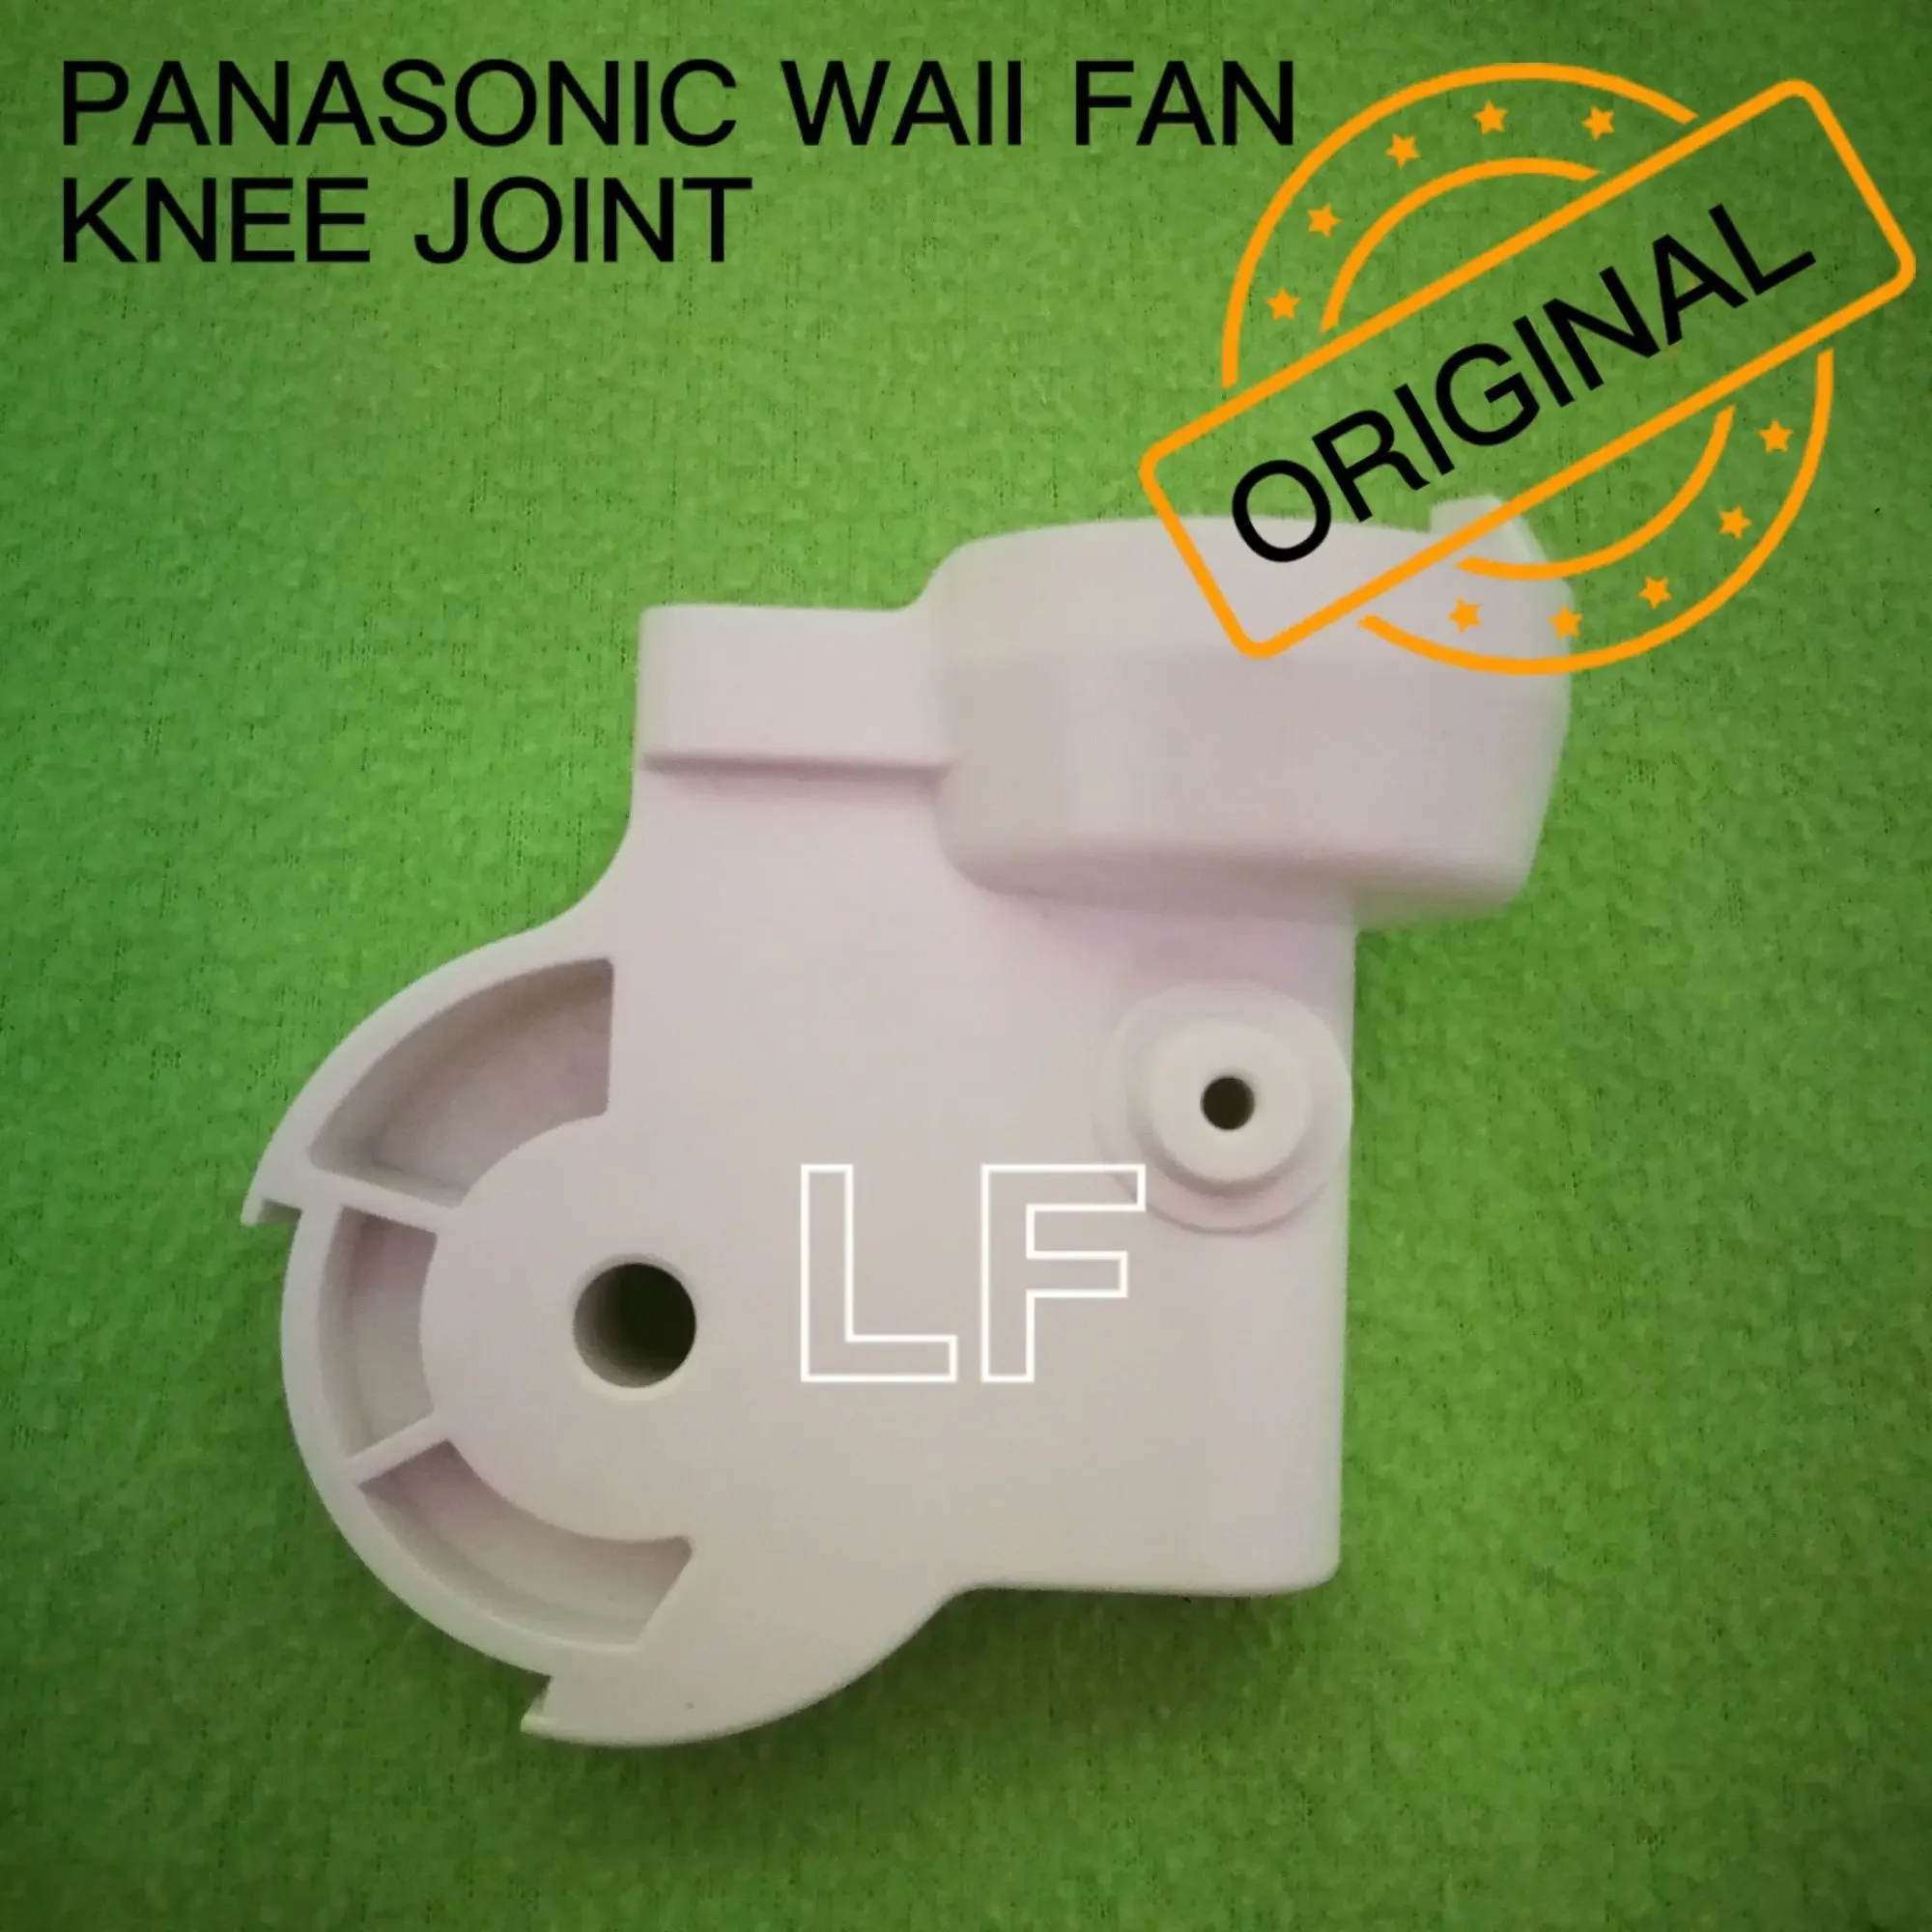 Original panasonic wall fan knee joint f-mu408 / kdk wall fan knee joint ku408